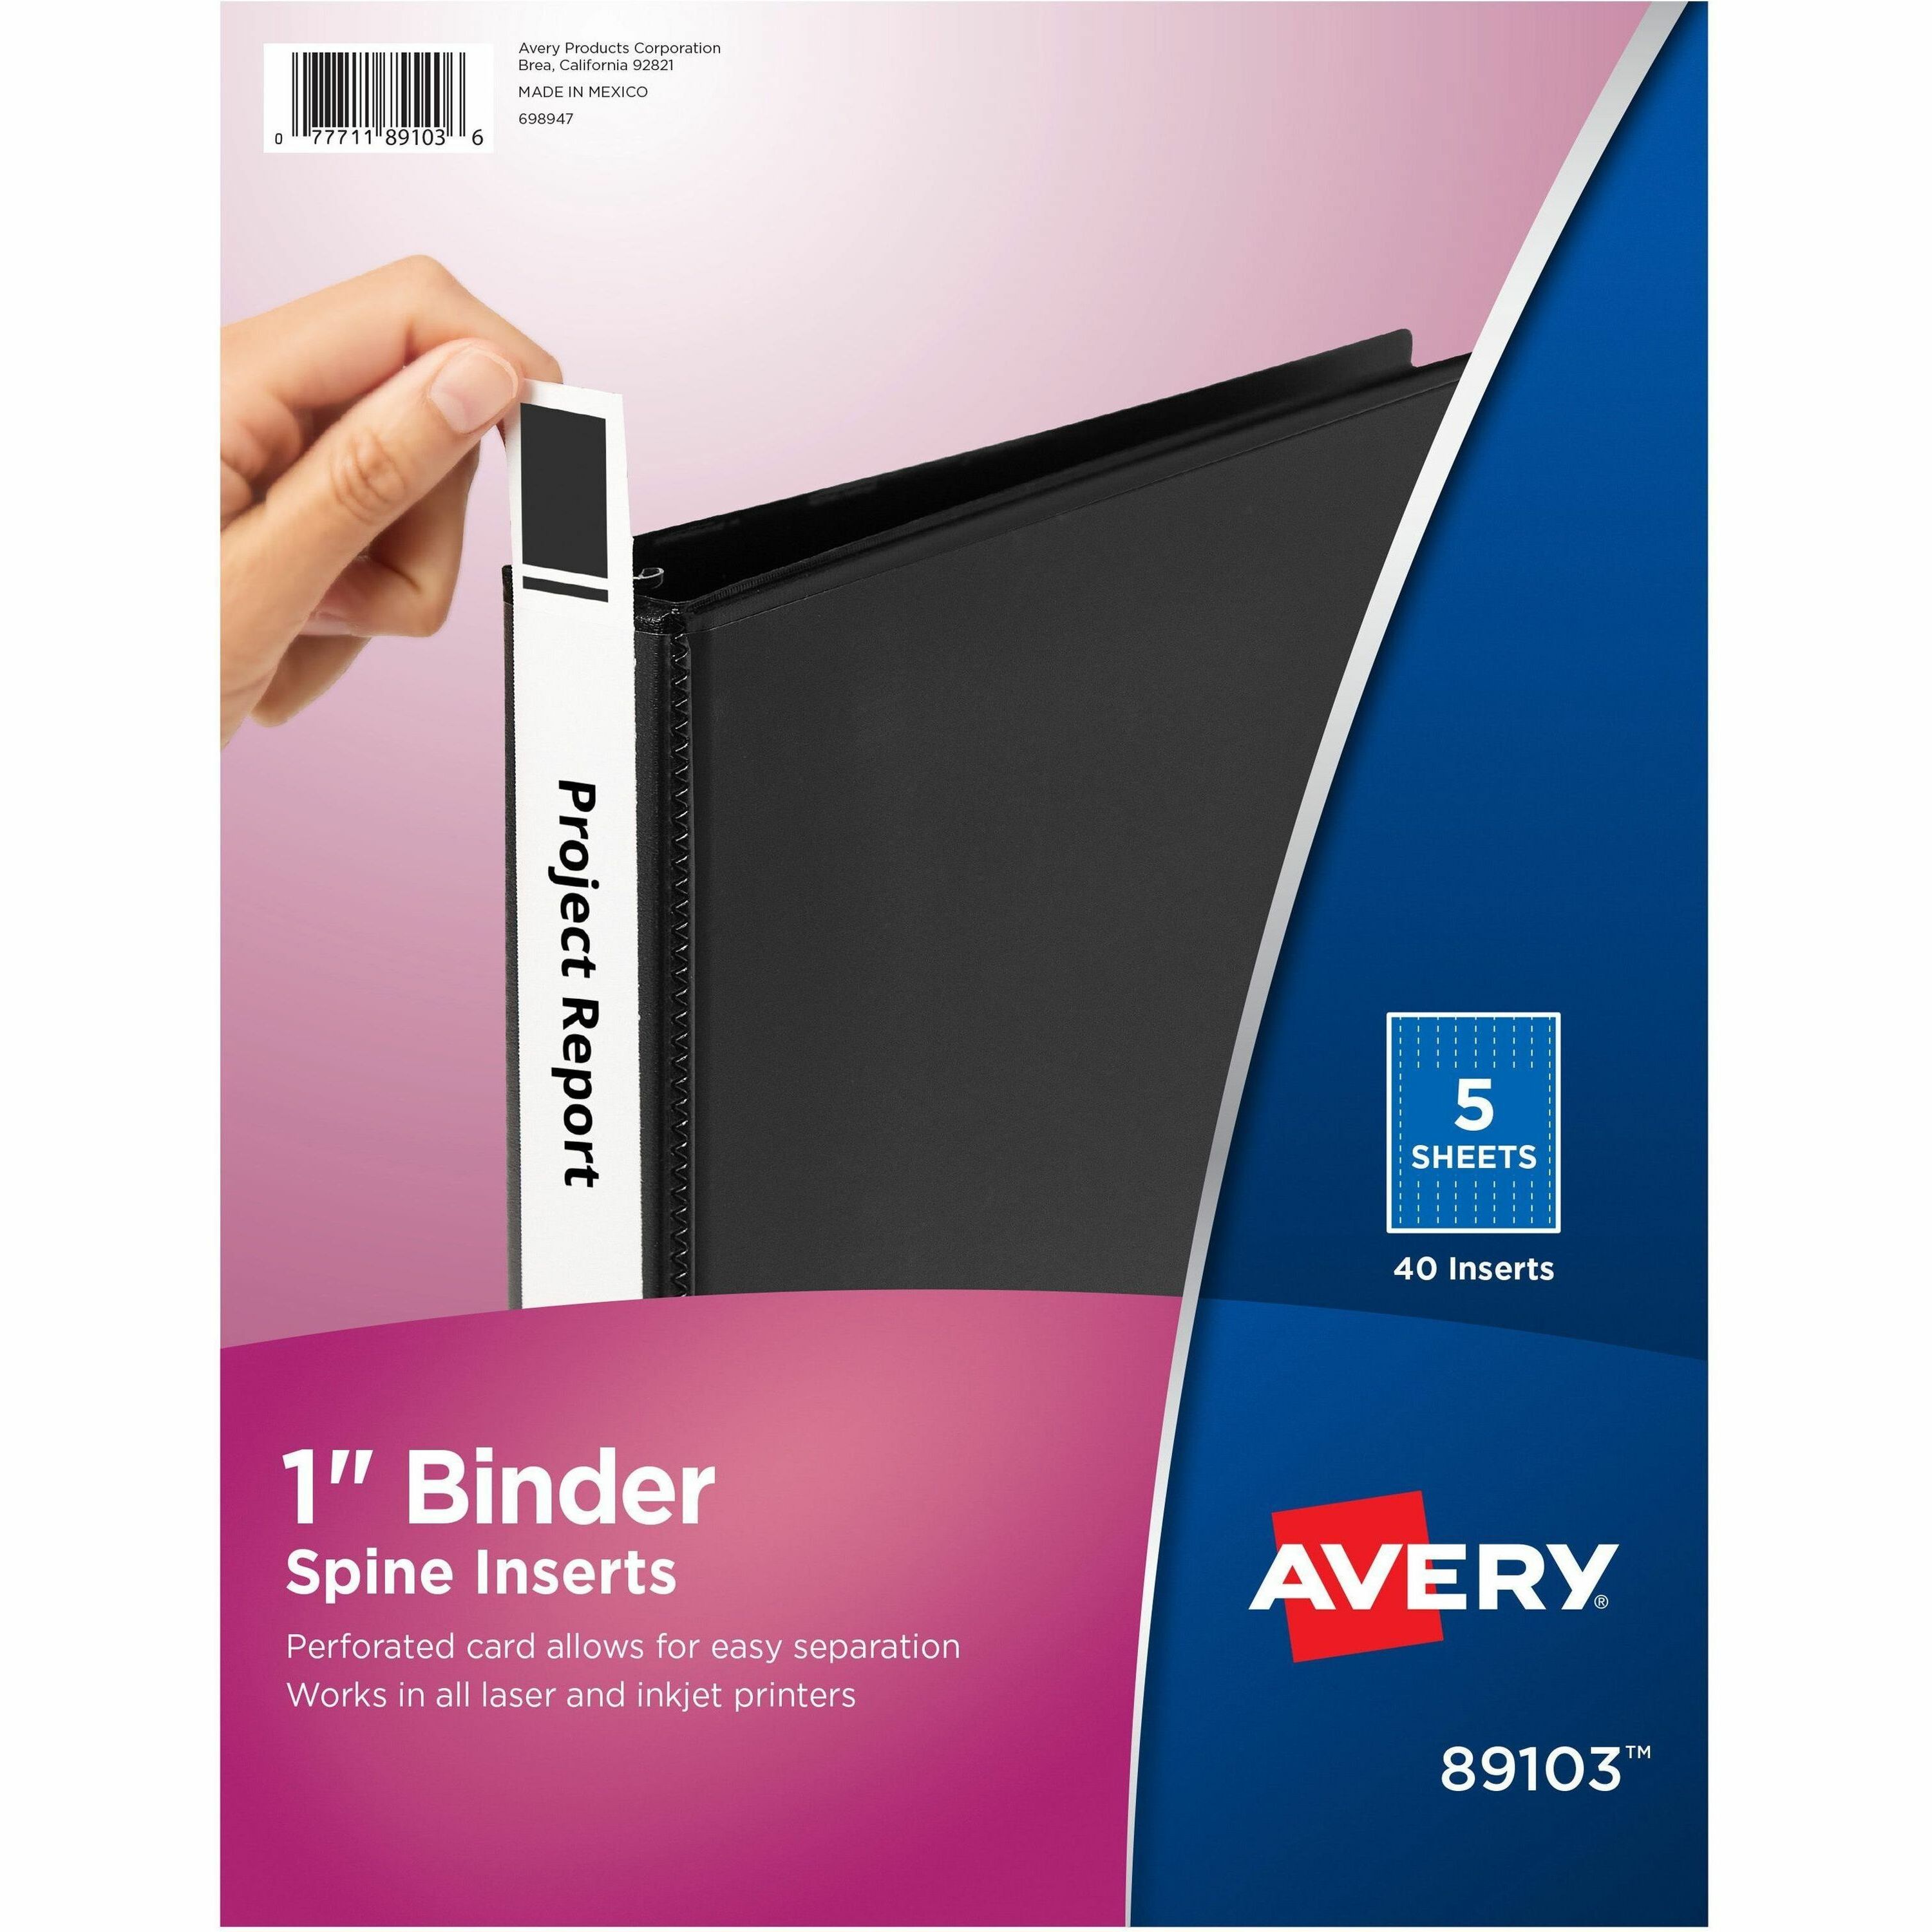 avery-r-binder-spine-inserts-1-inch-binders-40-inserts-89103